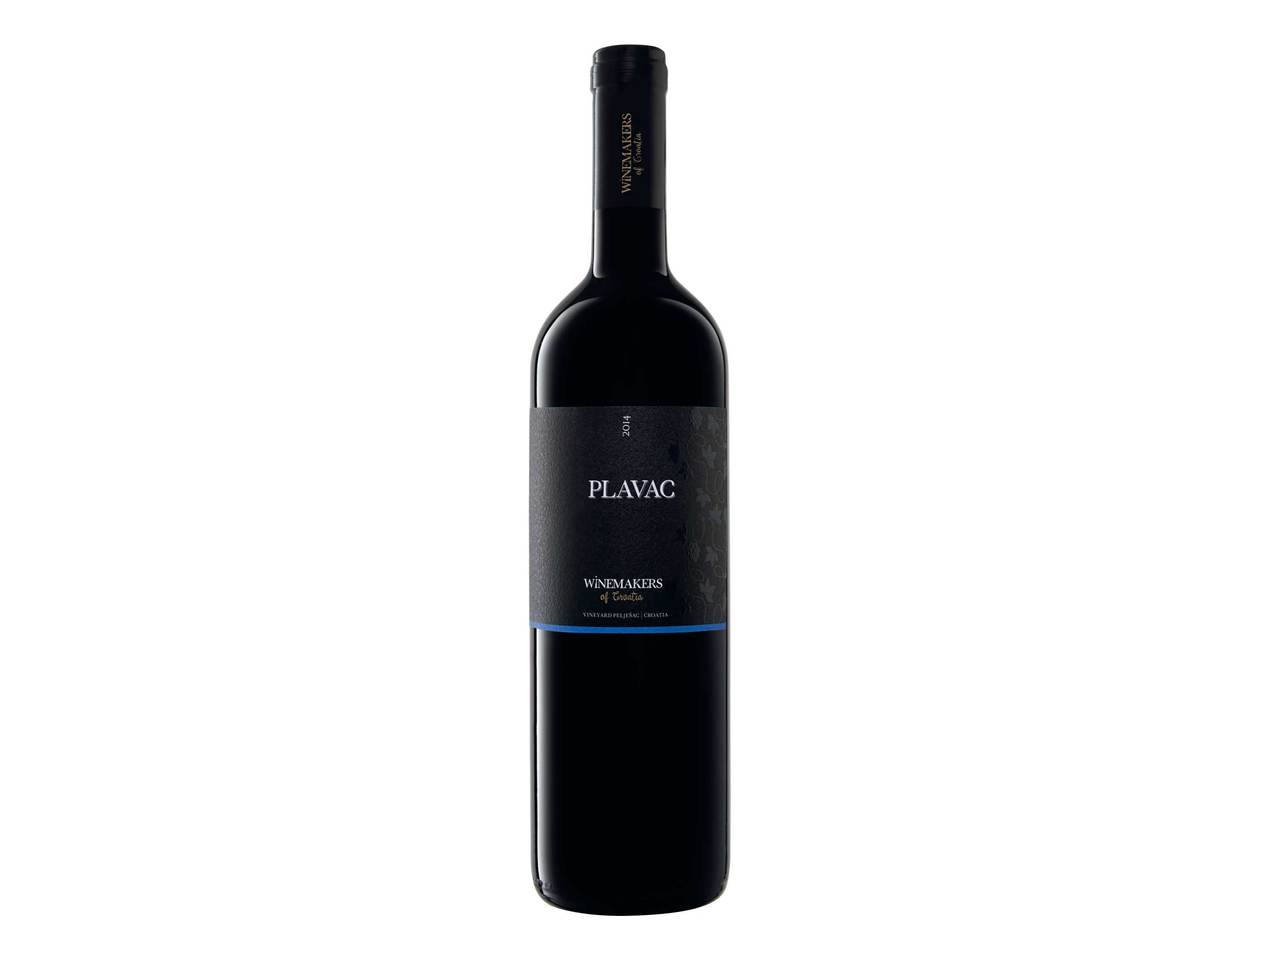 WINEMAKERS OF CROATIA(R) Plavac Red Wine 2014